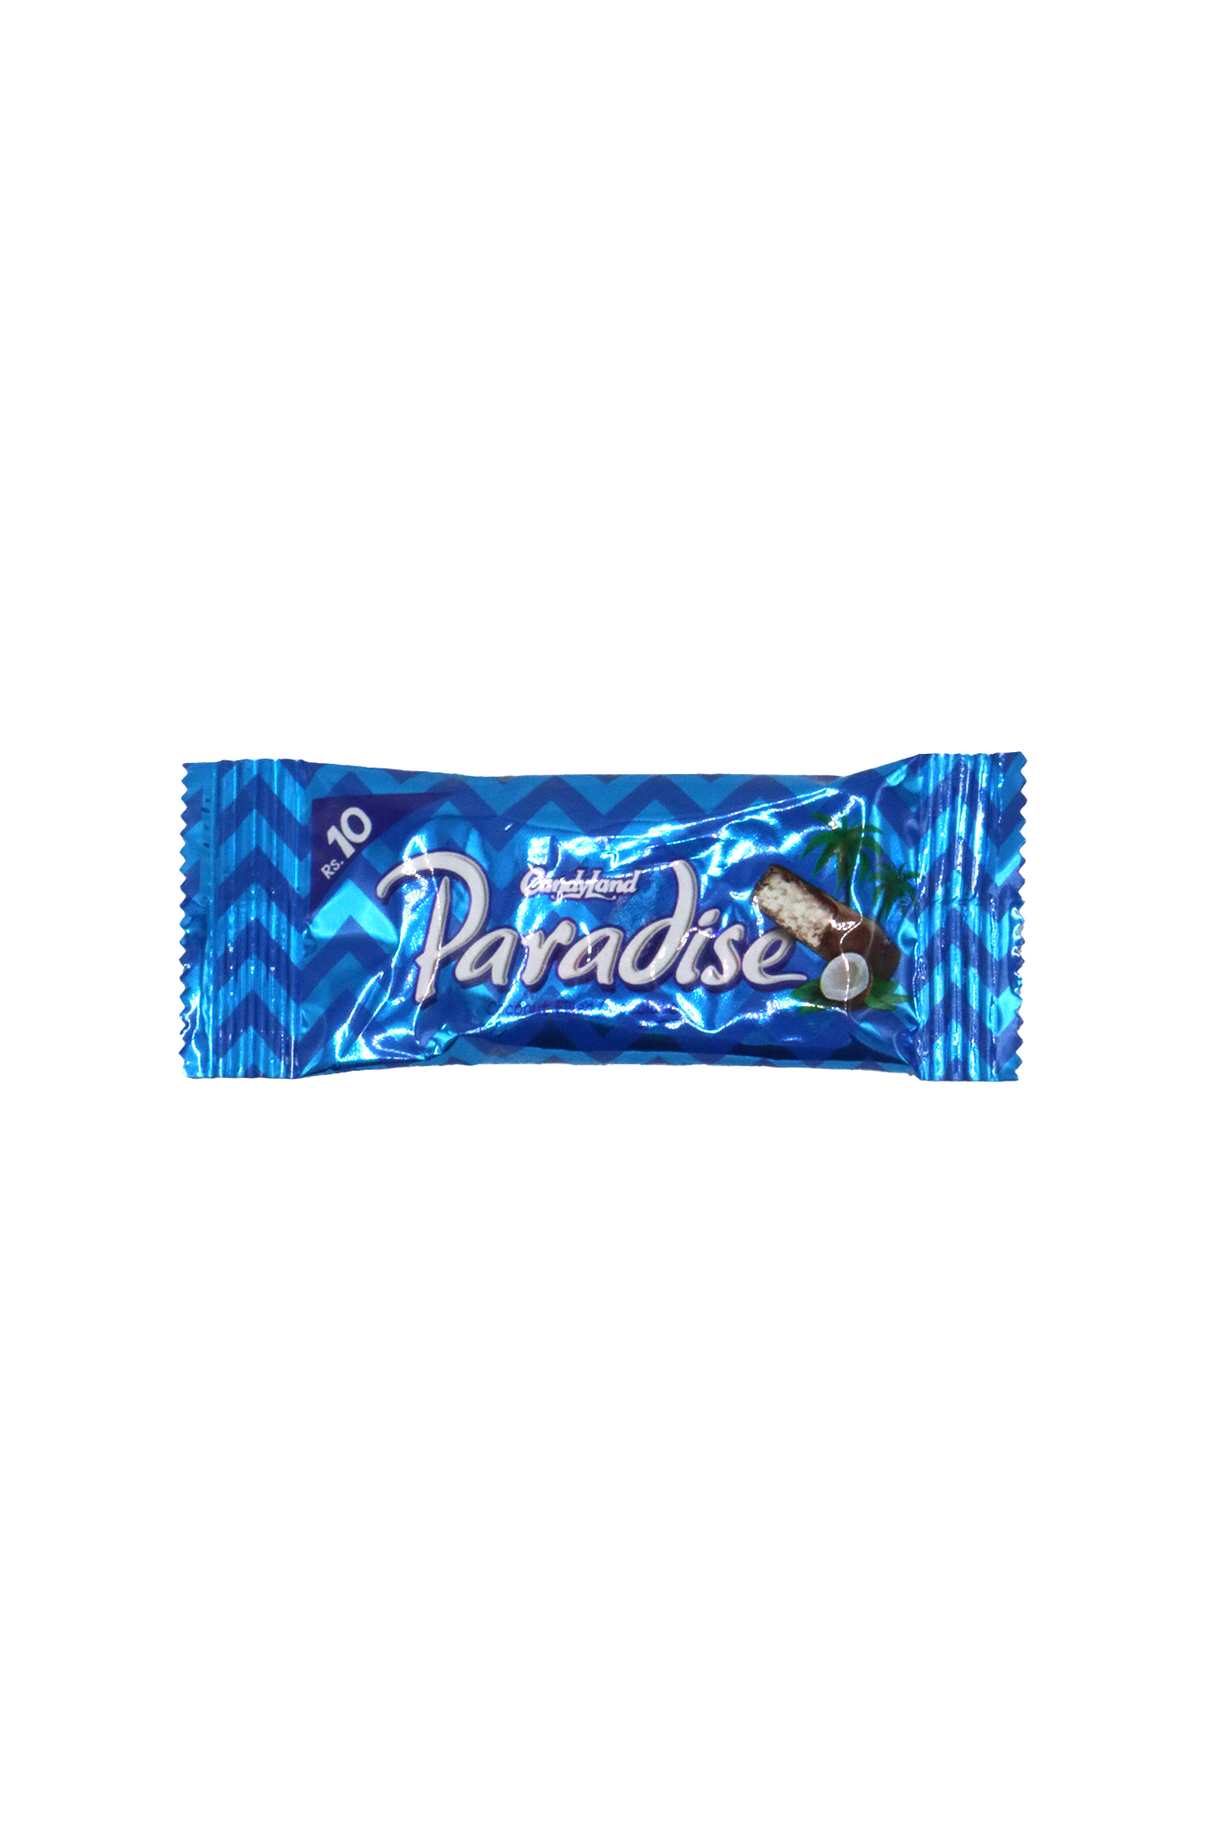 candyland chocolate paradise 10rs